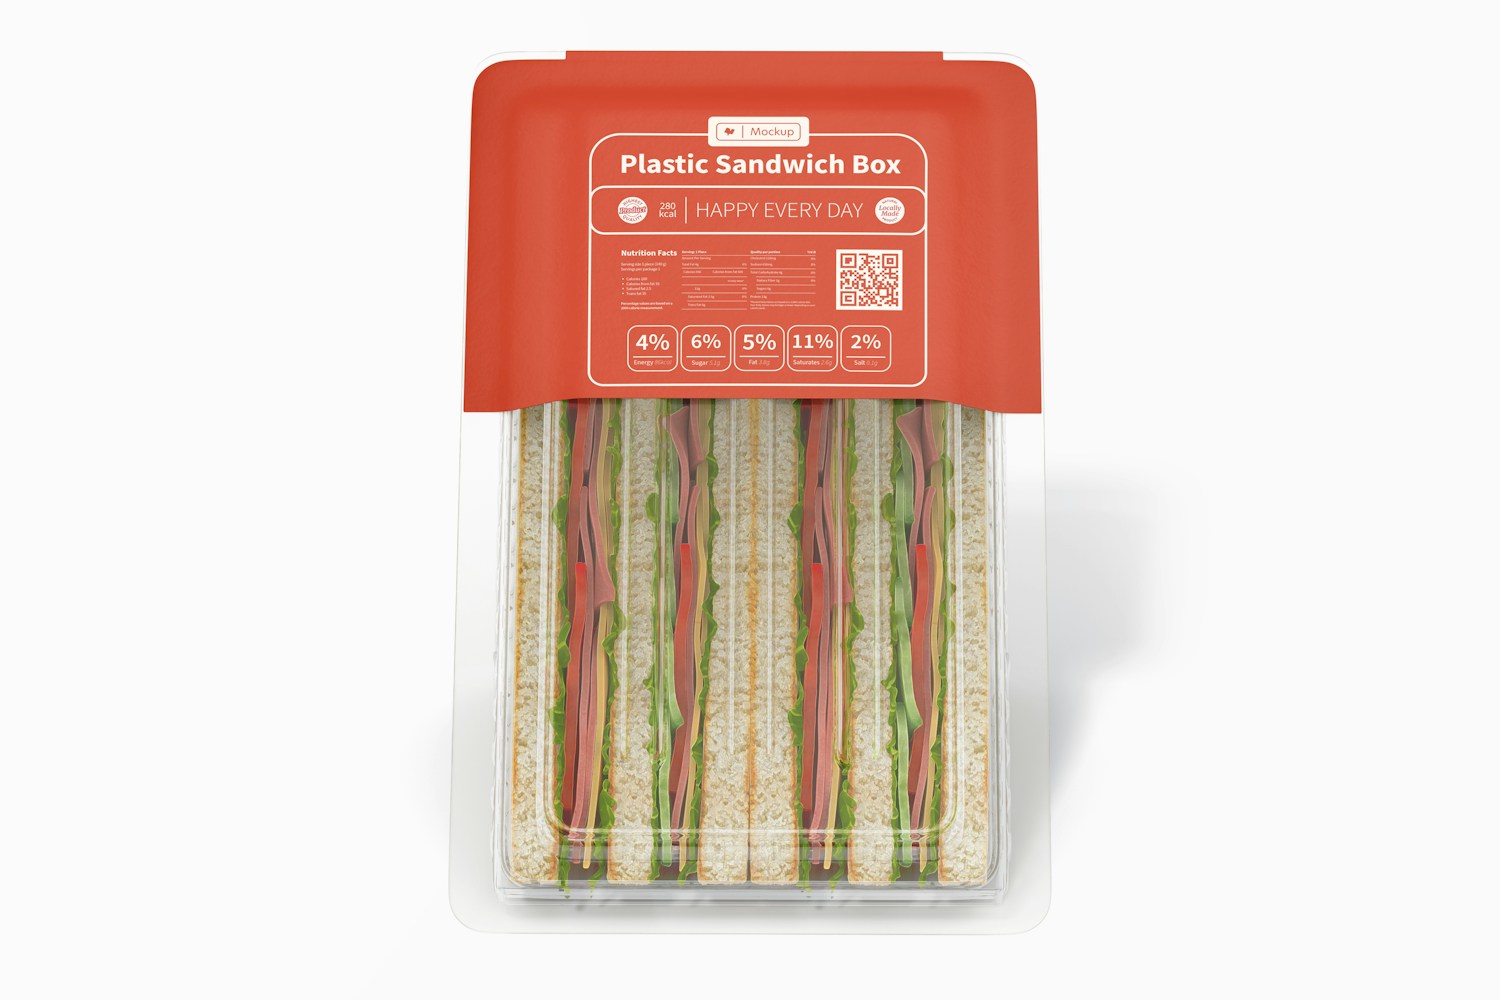 Plastic Sandwich Box Mockup, Front View